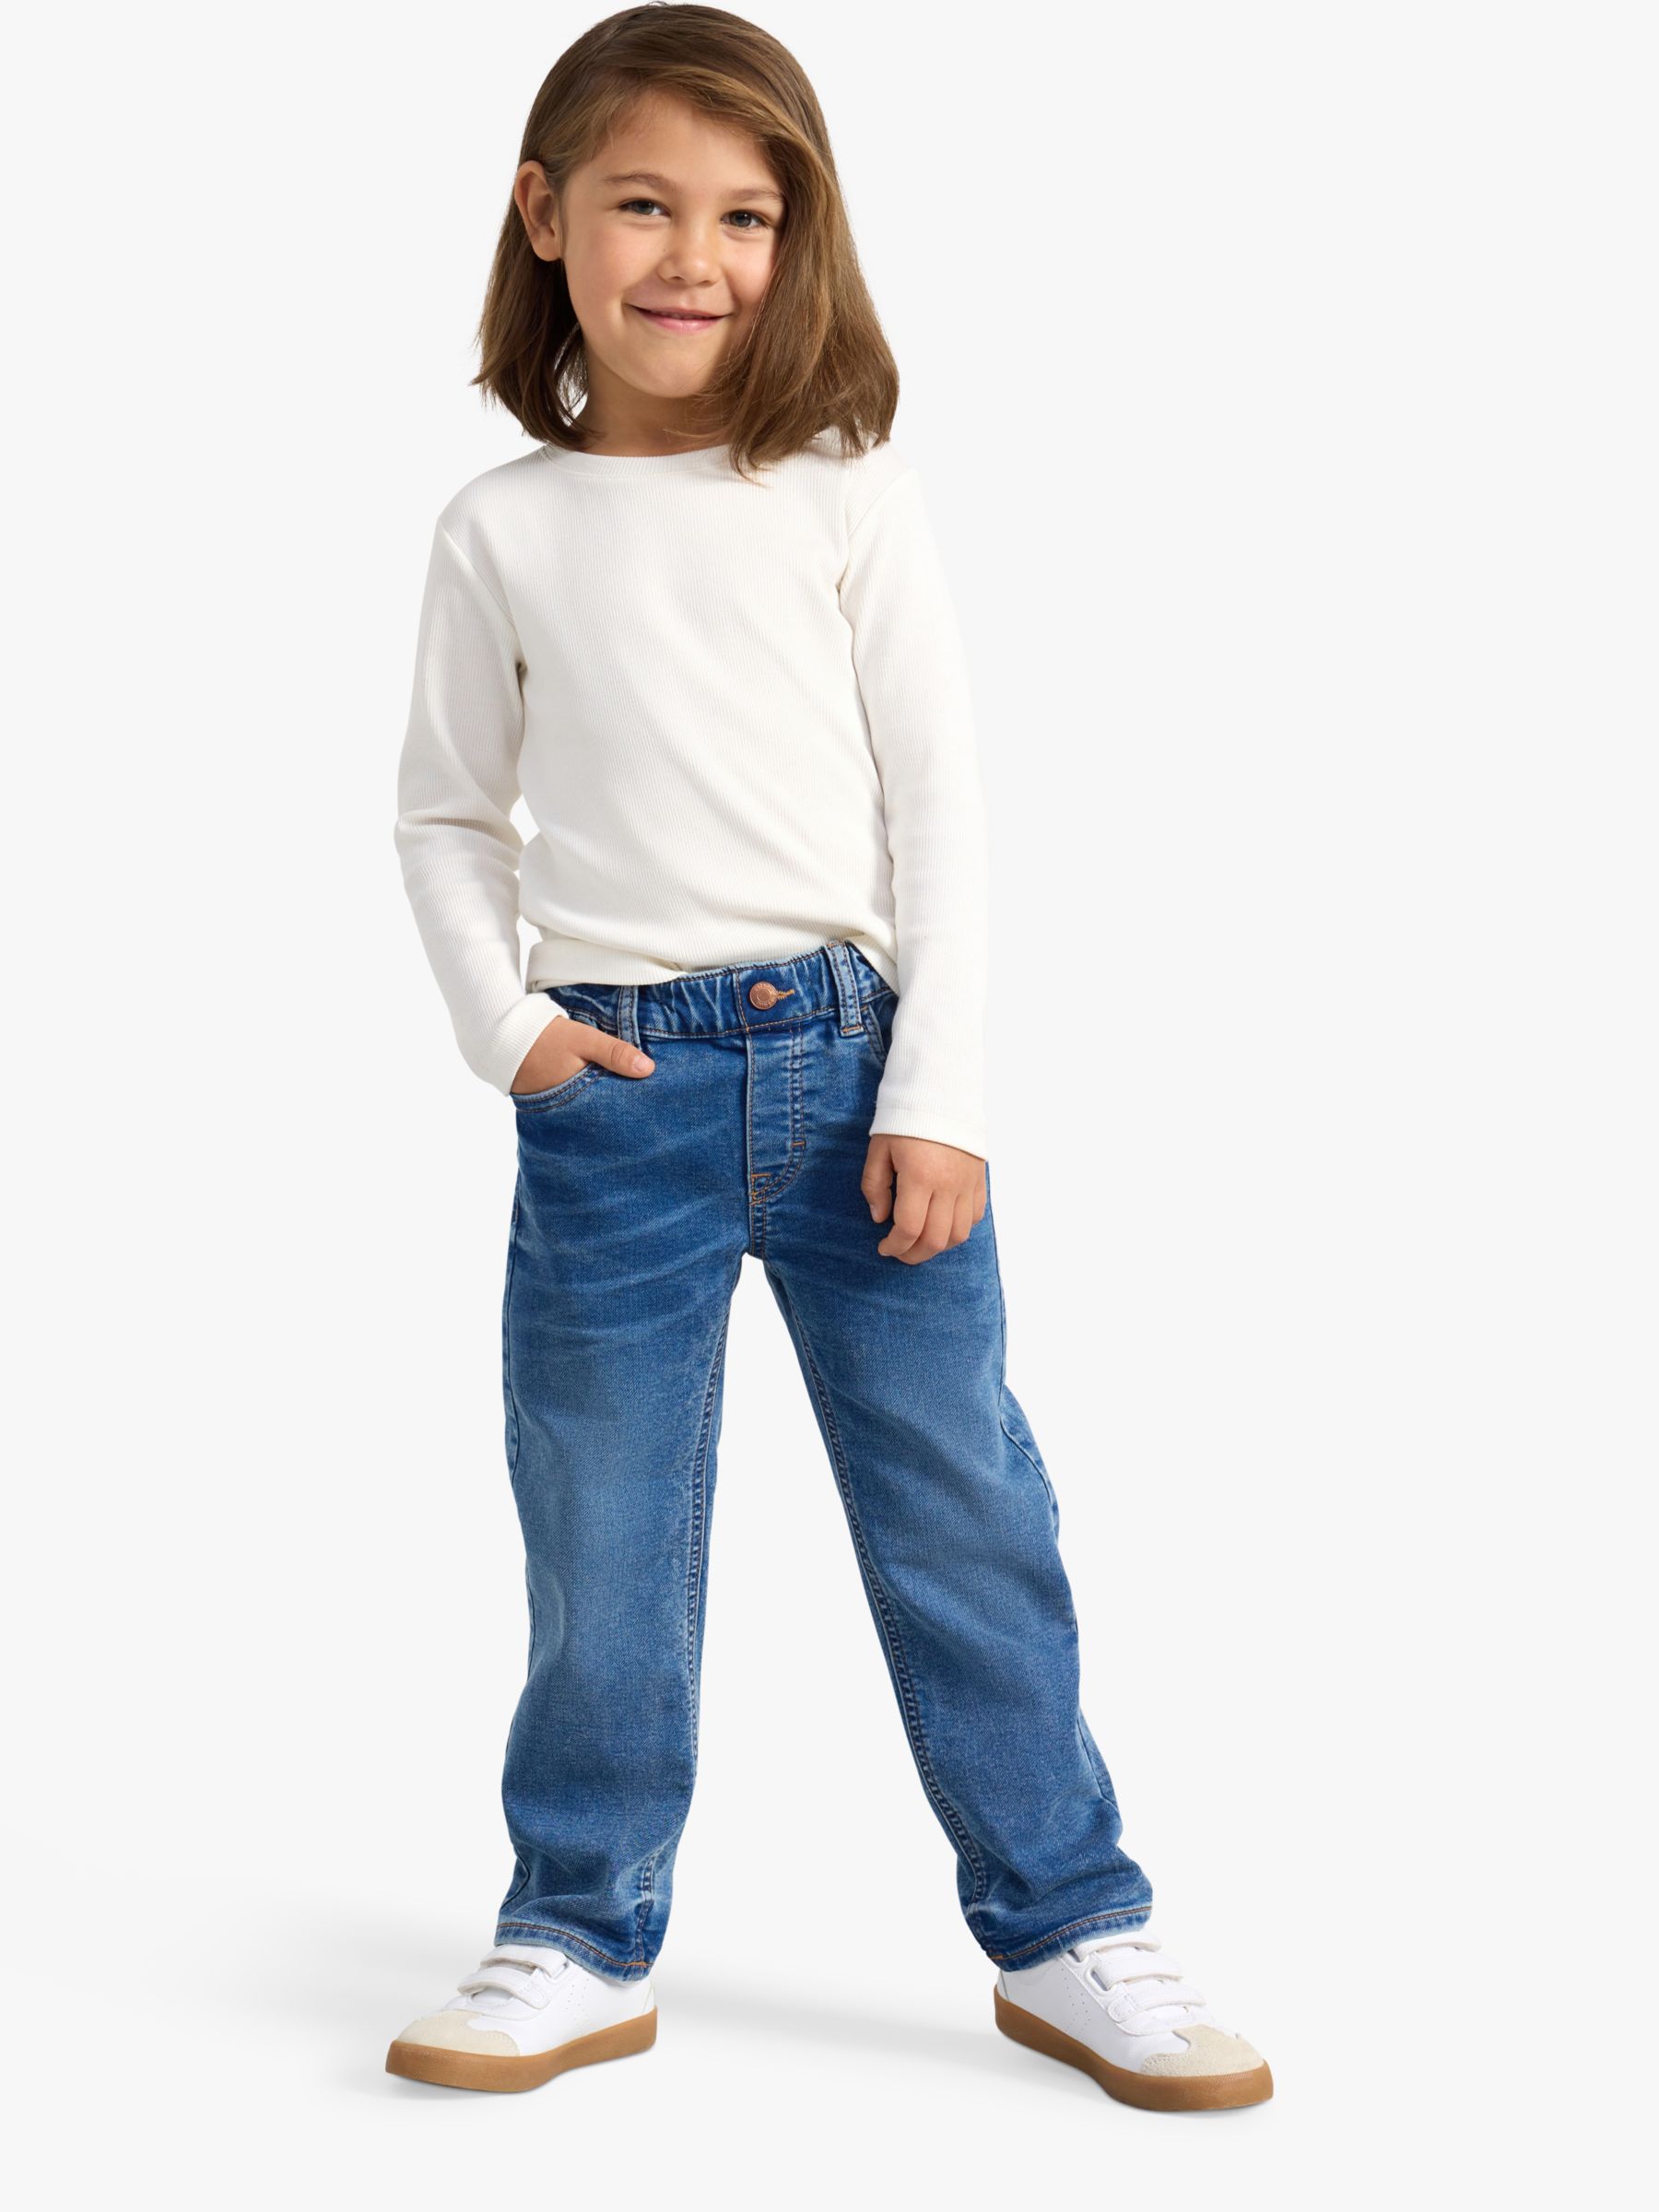 Lindex Kids' Staffan Denim Jeans, Denim, 3 years